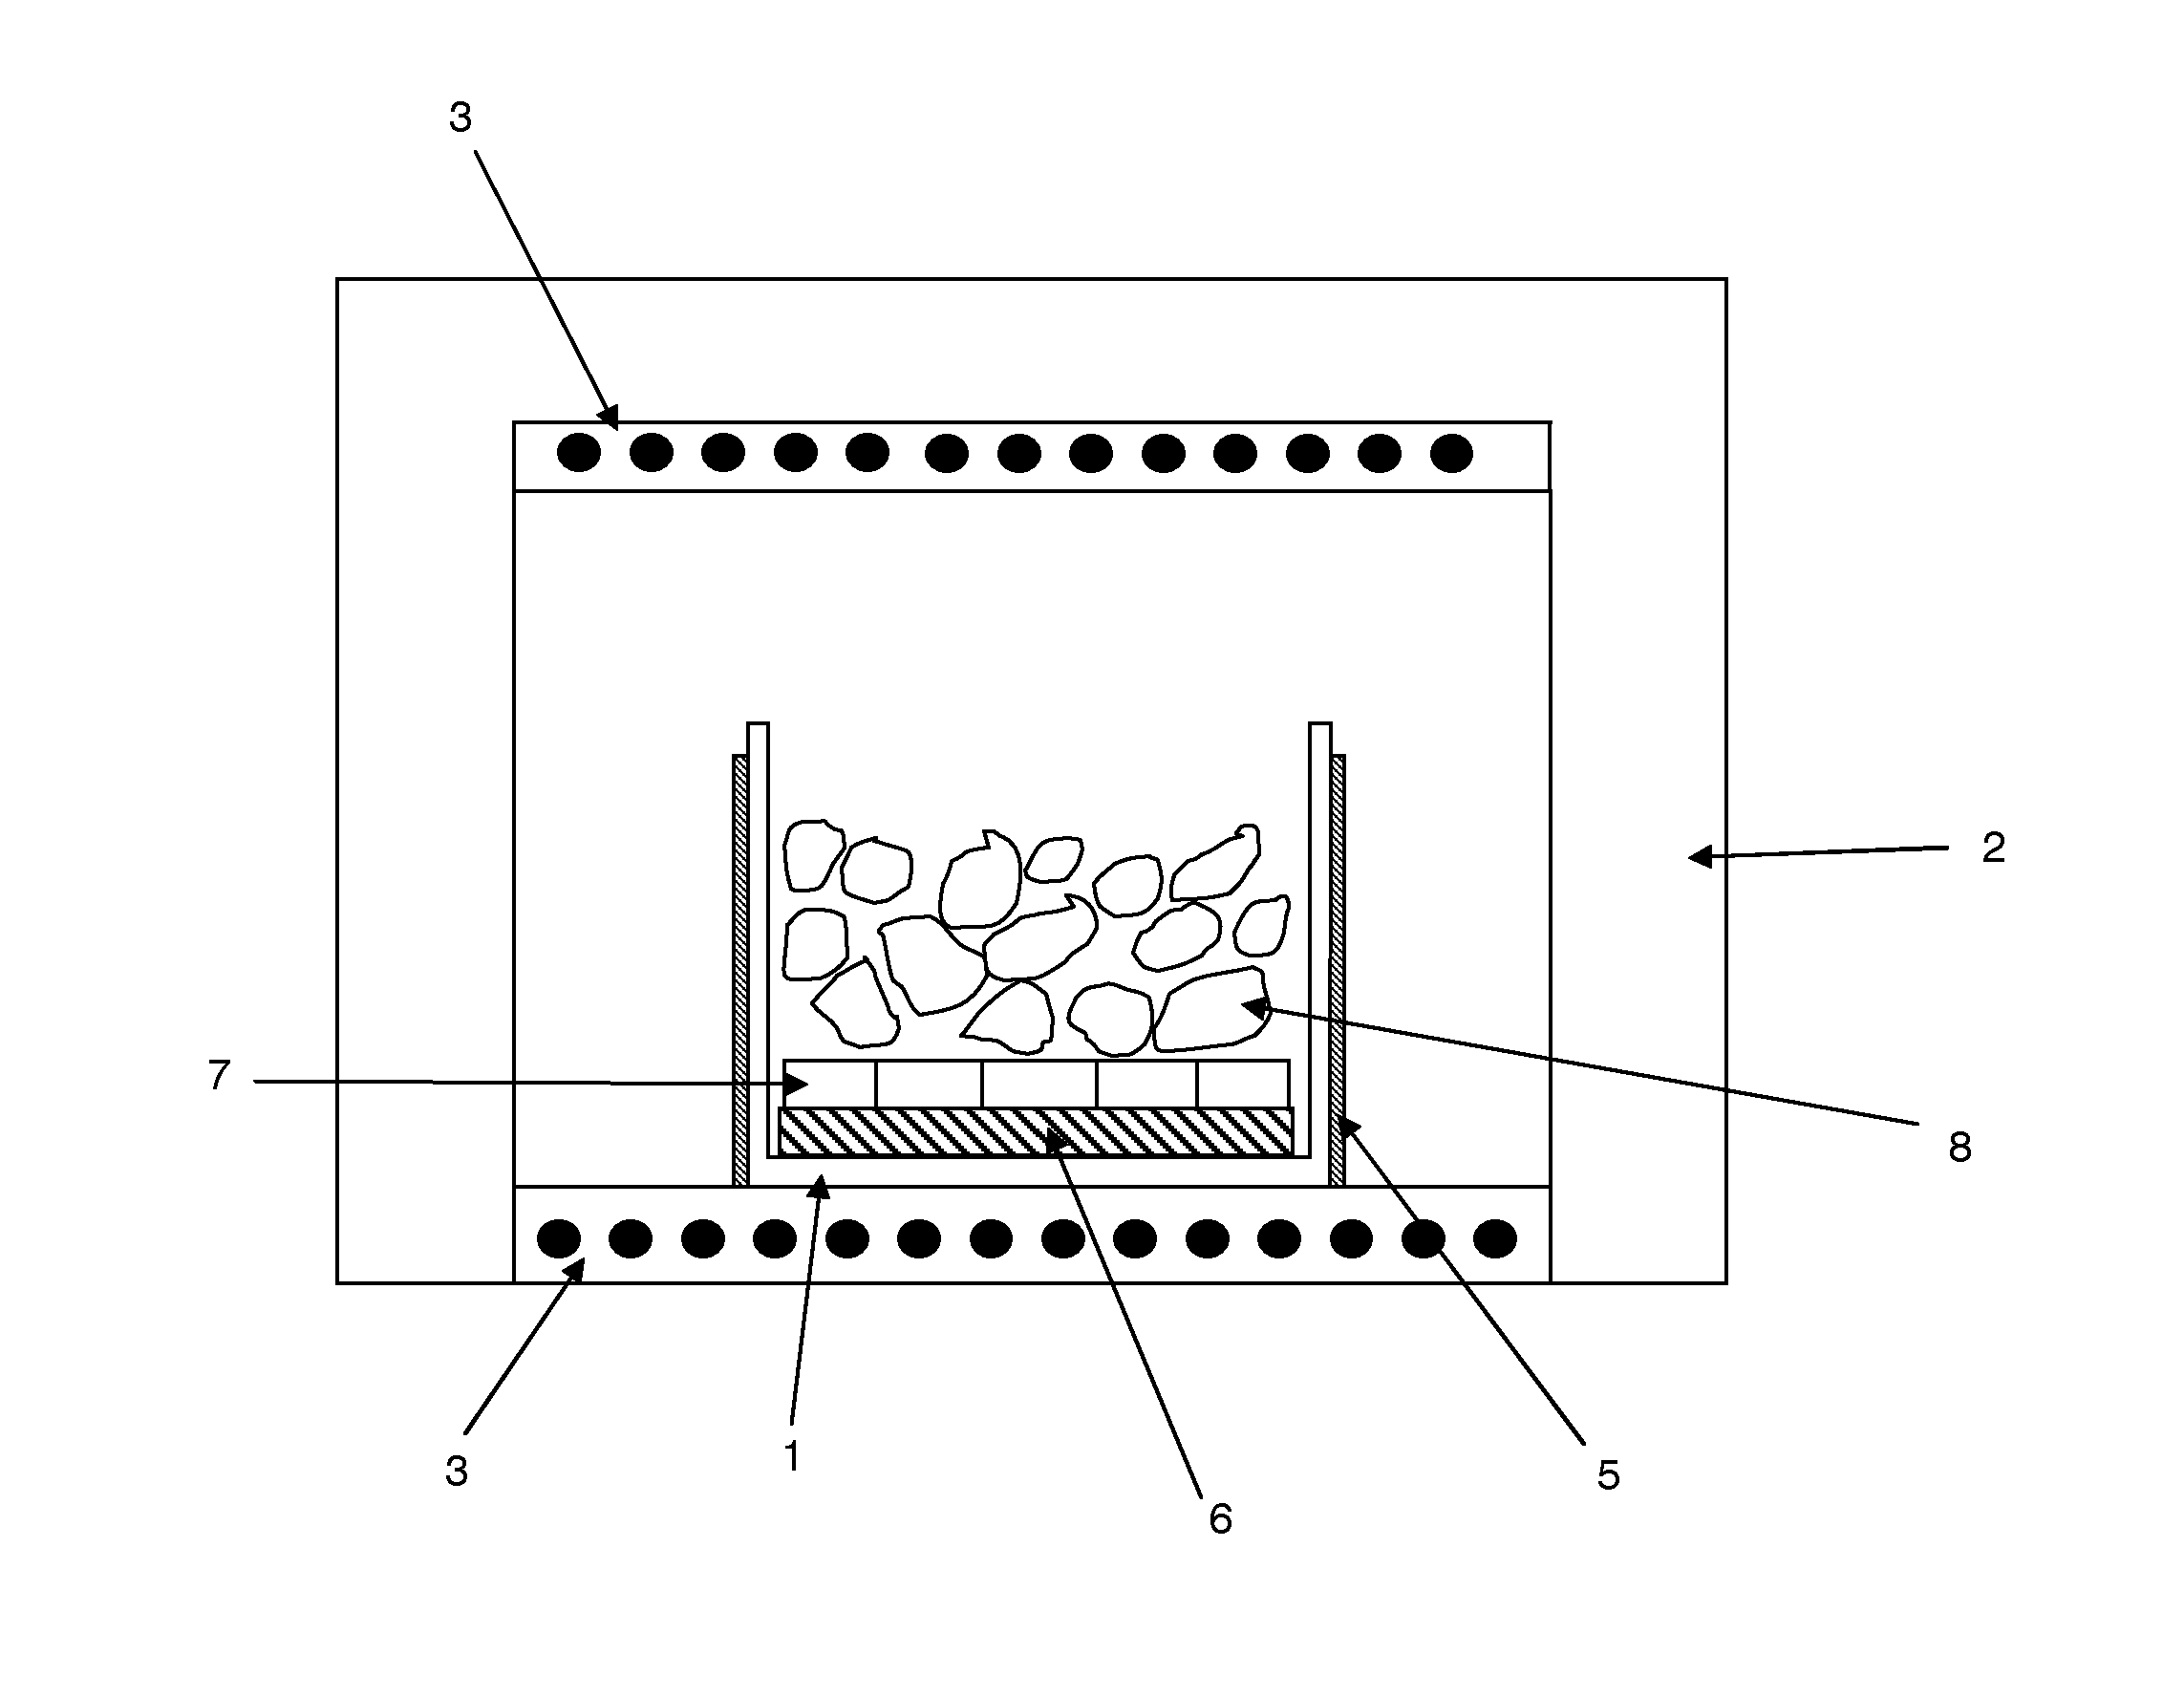 Production of mono-crystalline silicon